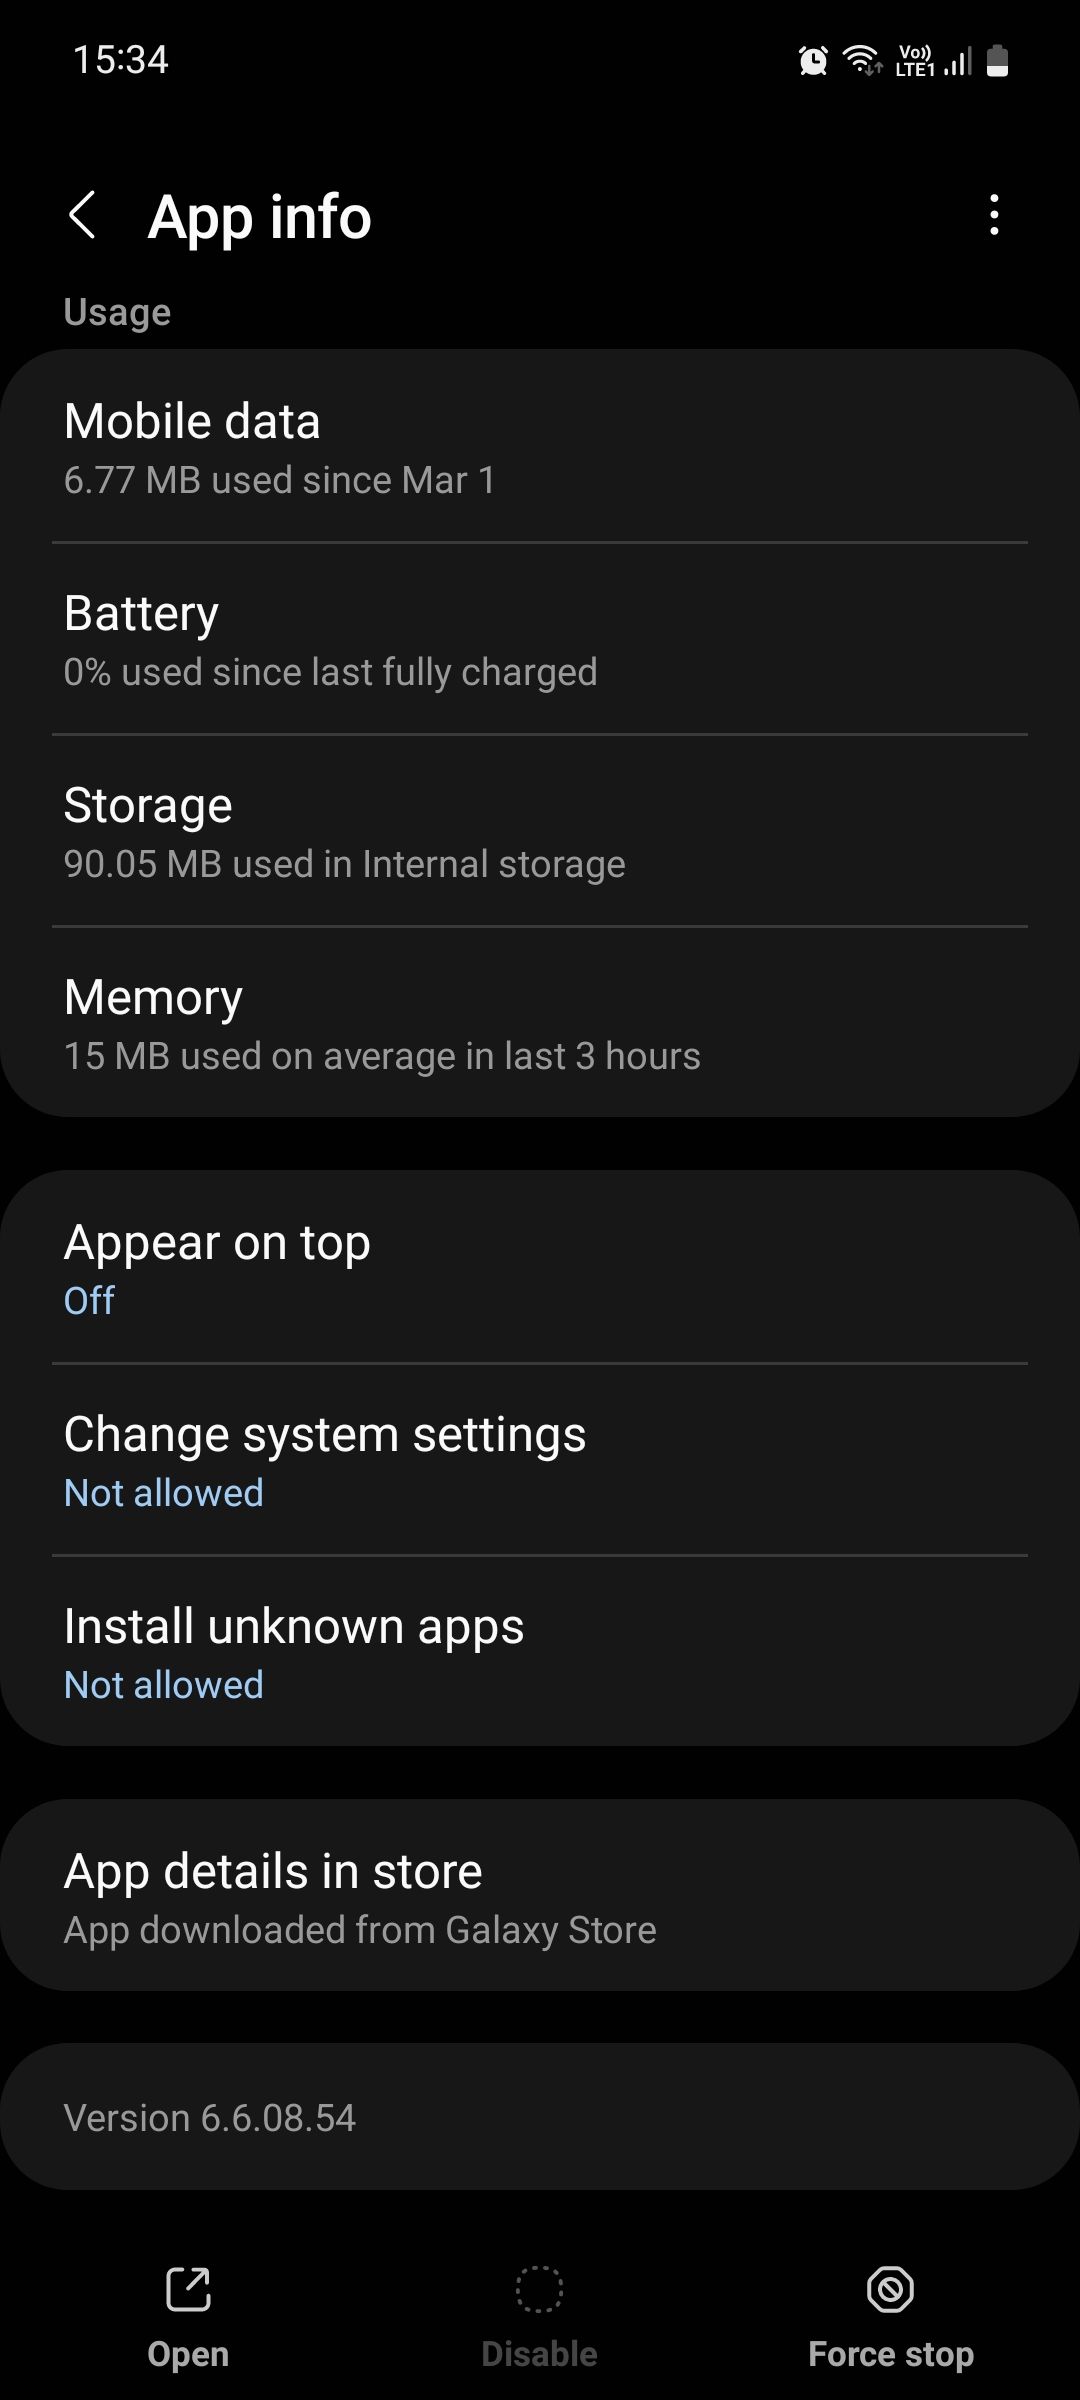 Samsung Galaxy Store app info page storage